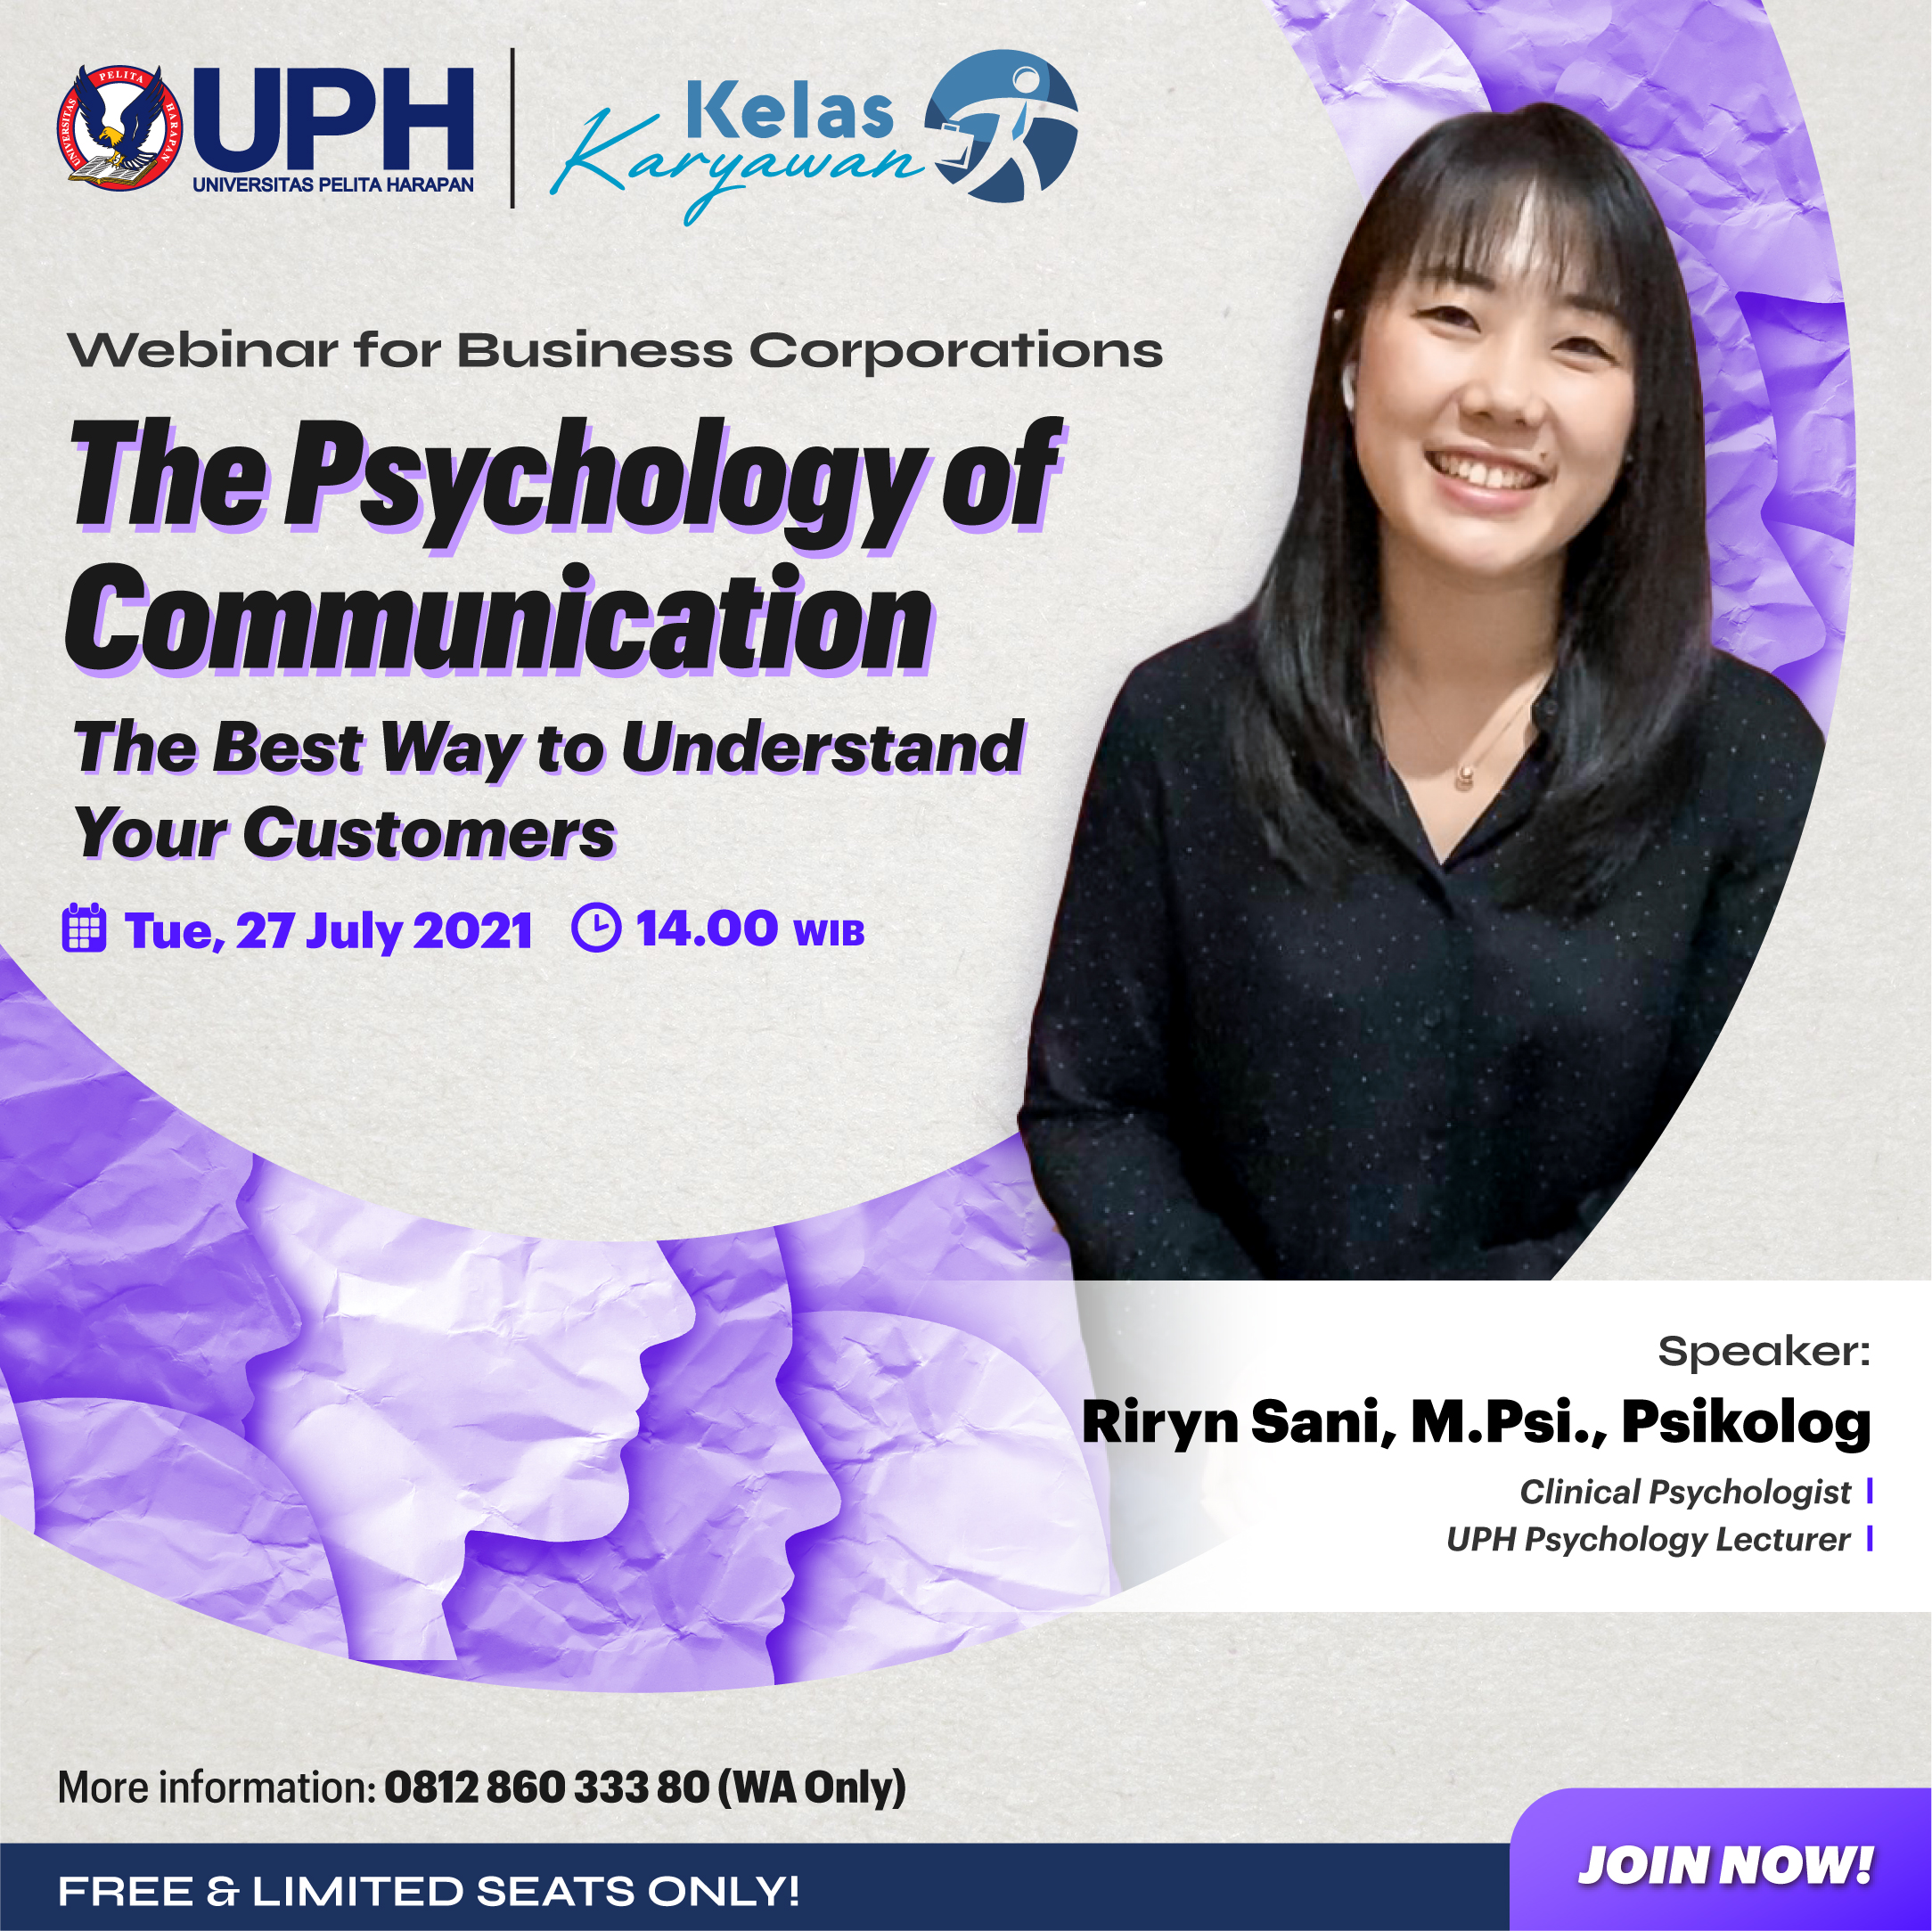 The Psychology of Communication